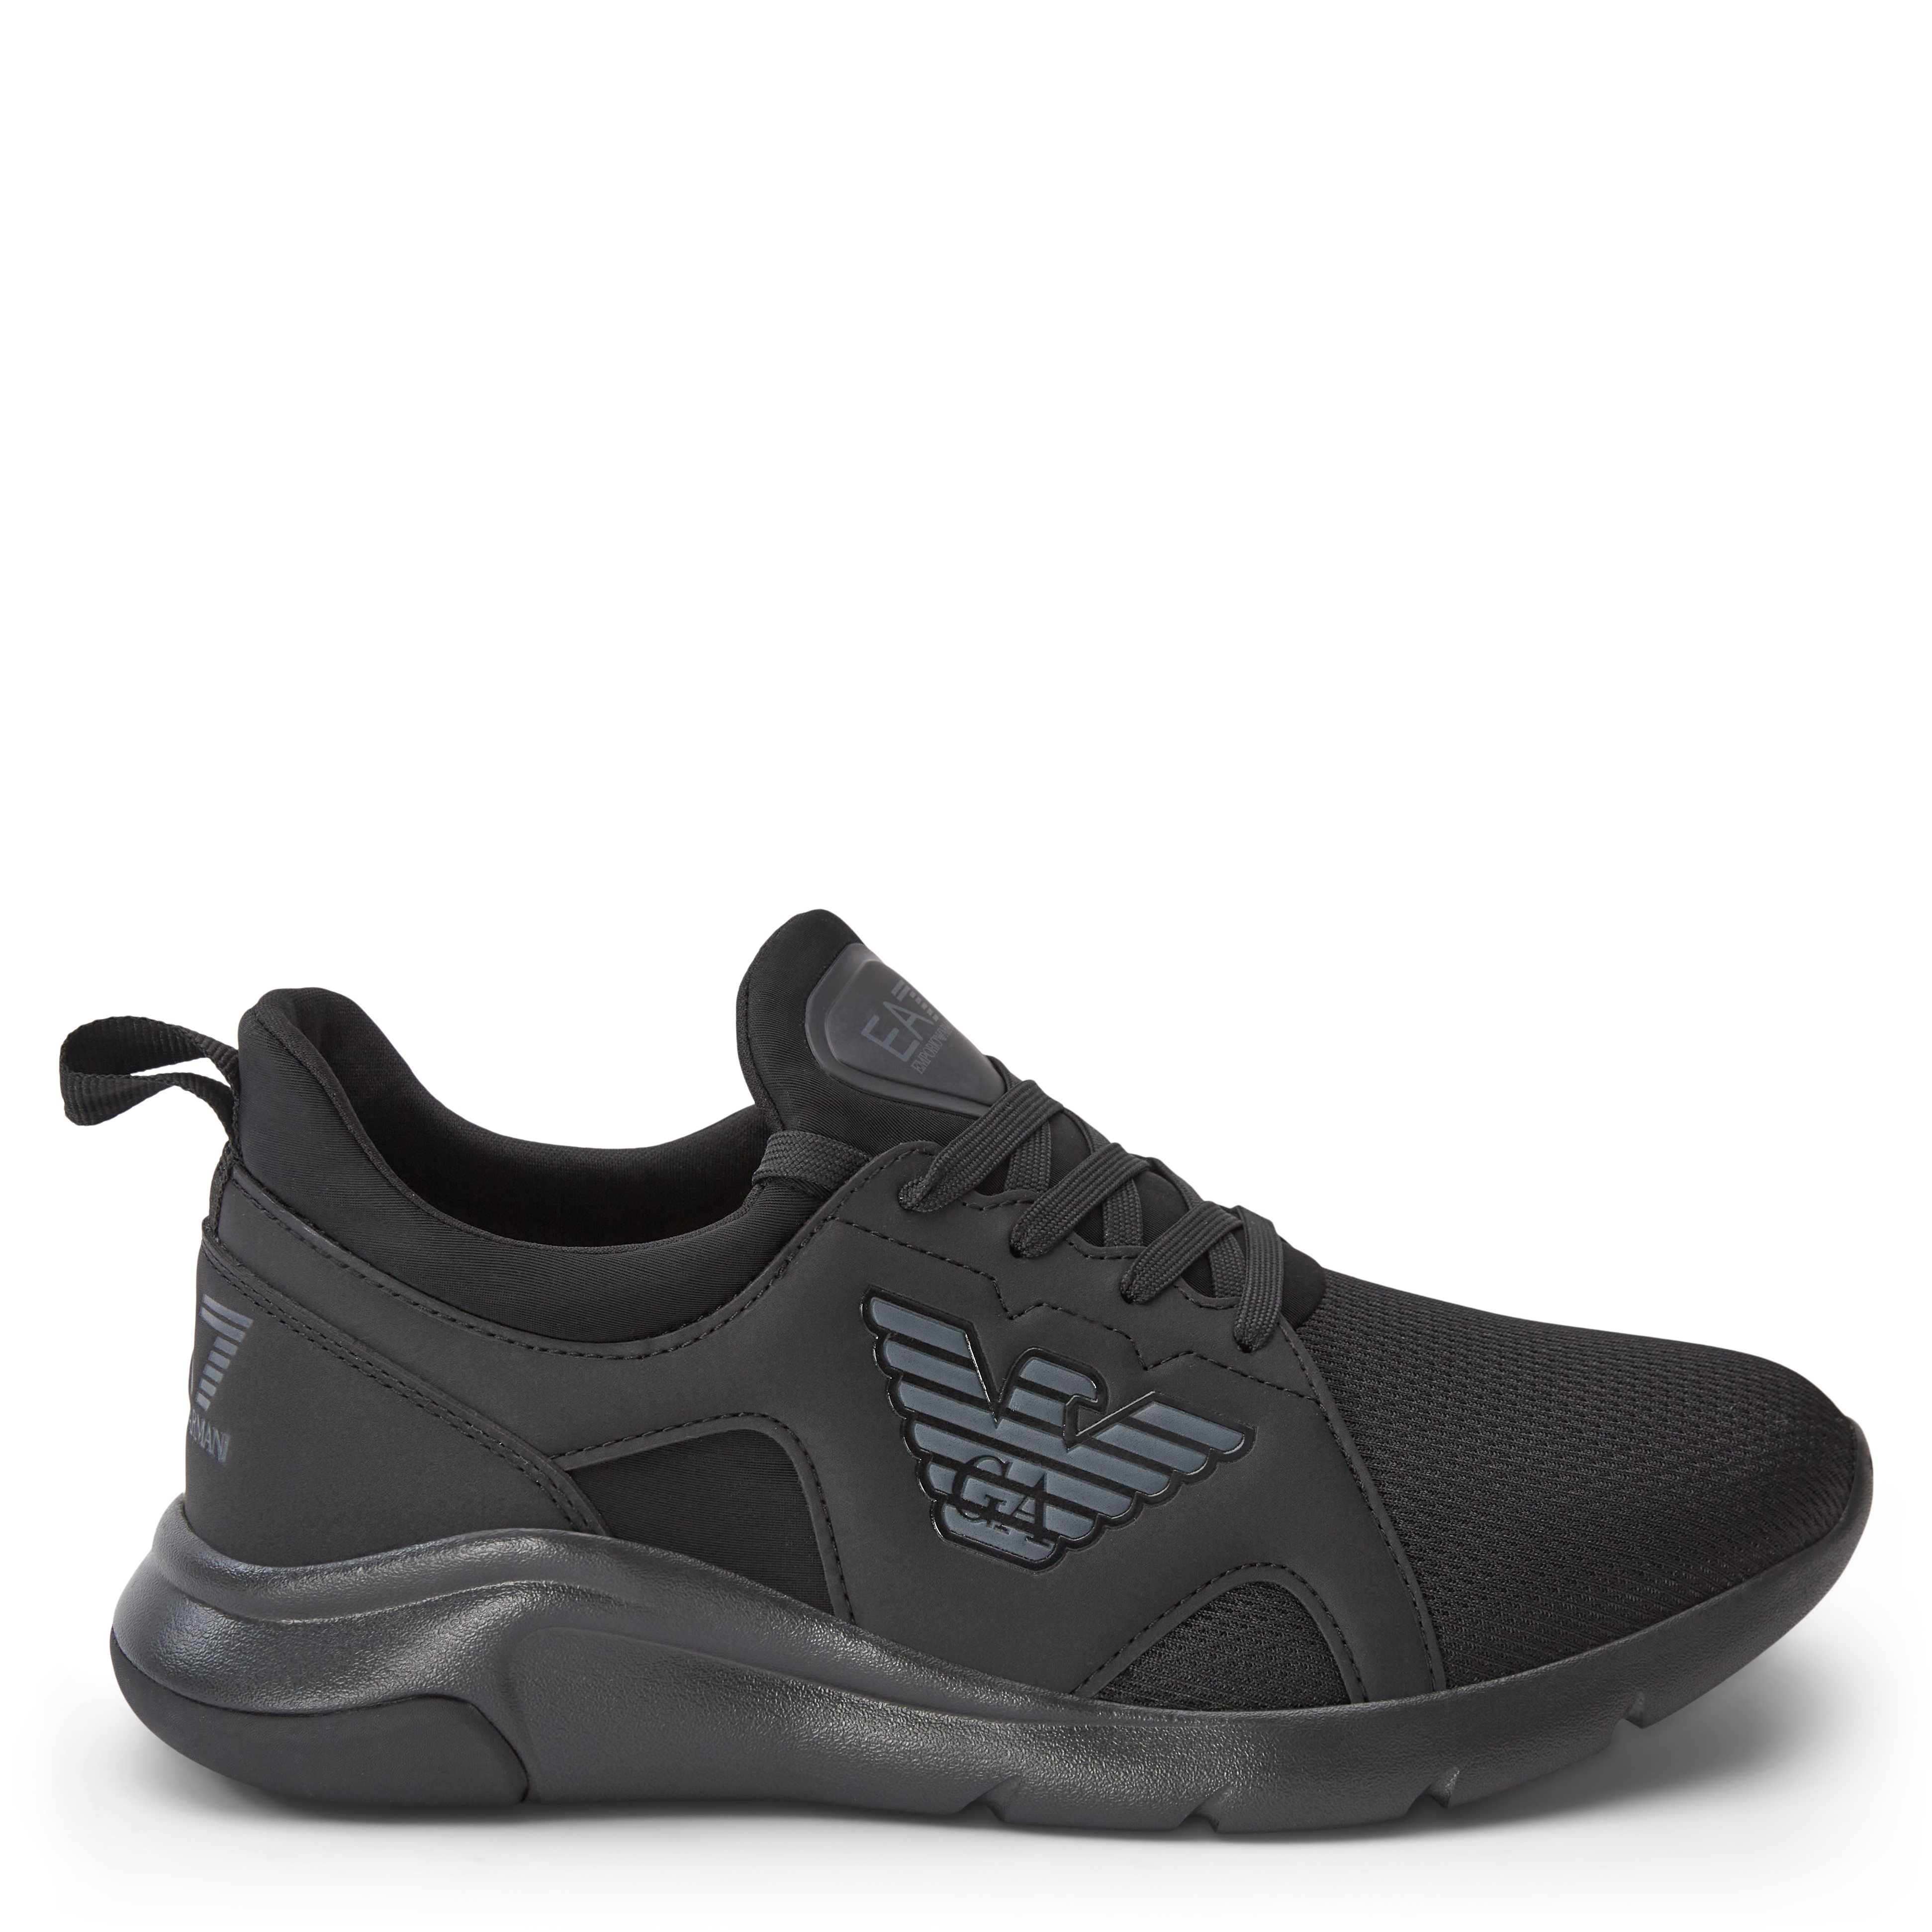 Xcc65-X8x056 Sneakers - Shoes - Black